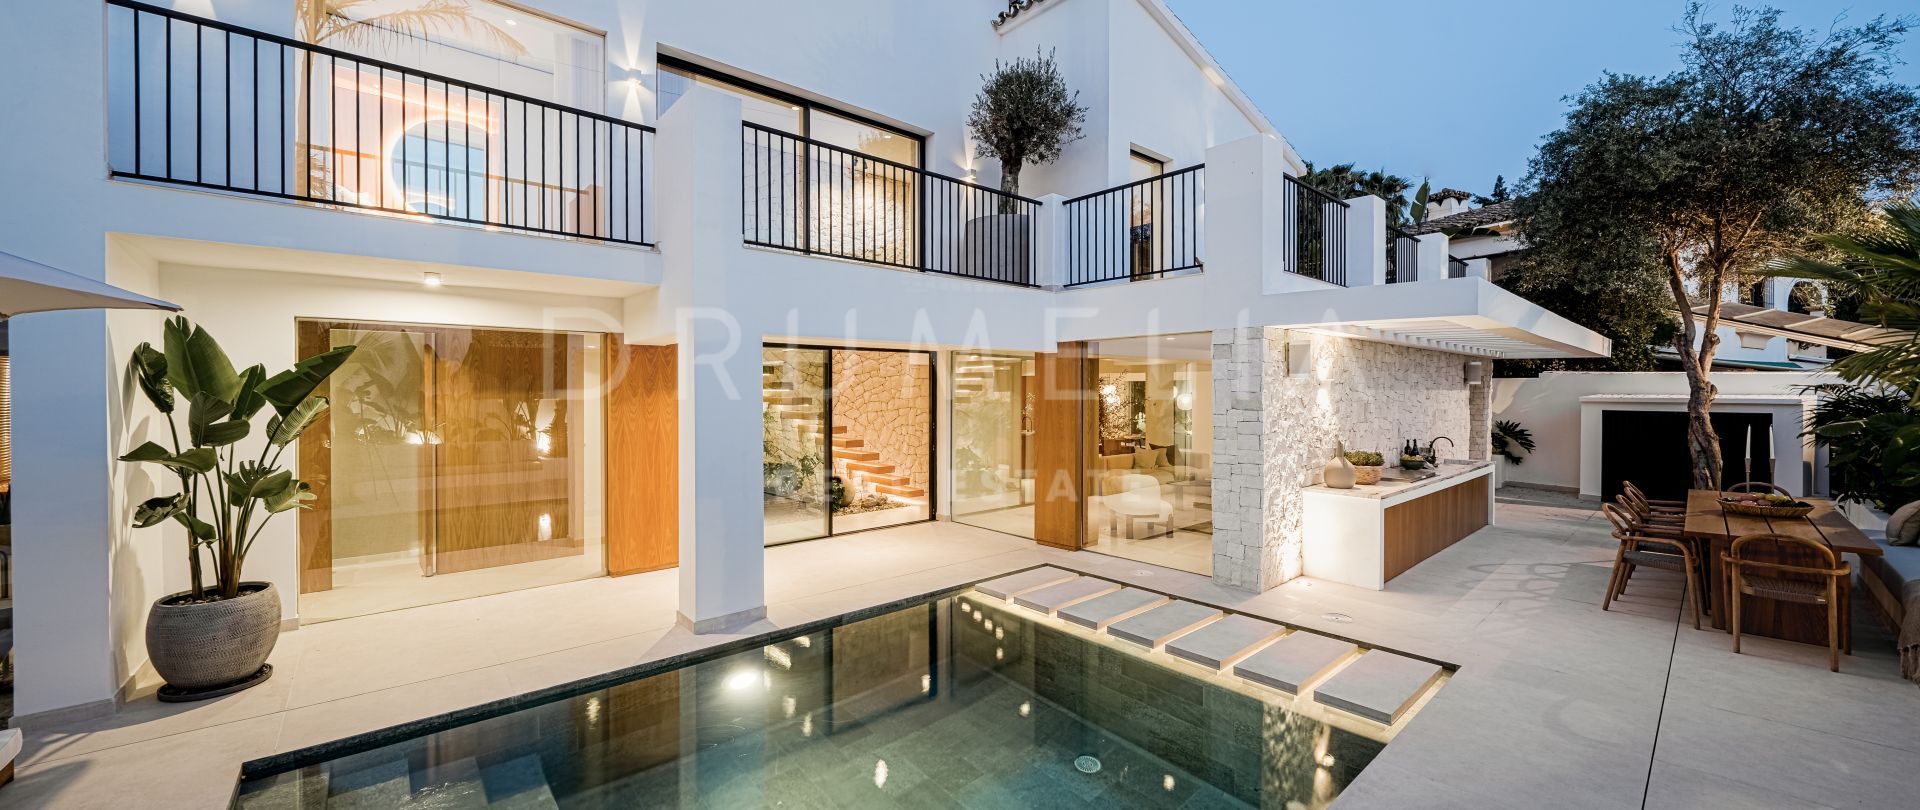 Stunning totally renovated villa in a prime location in Nueva Andalucia, Marbella